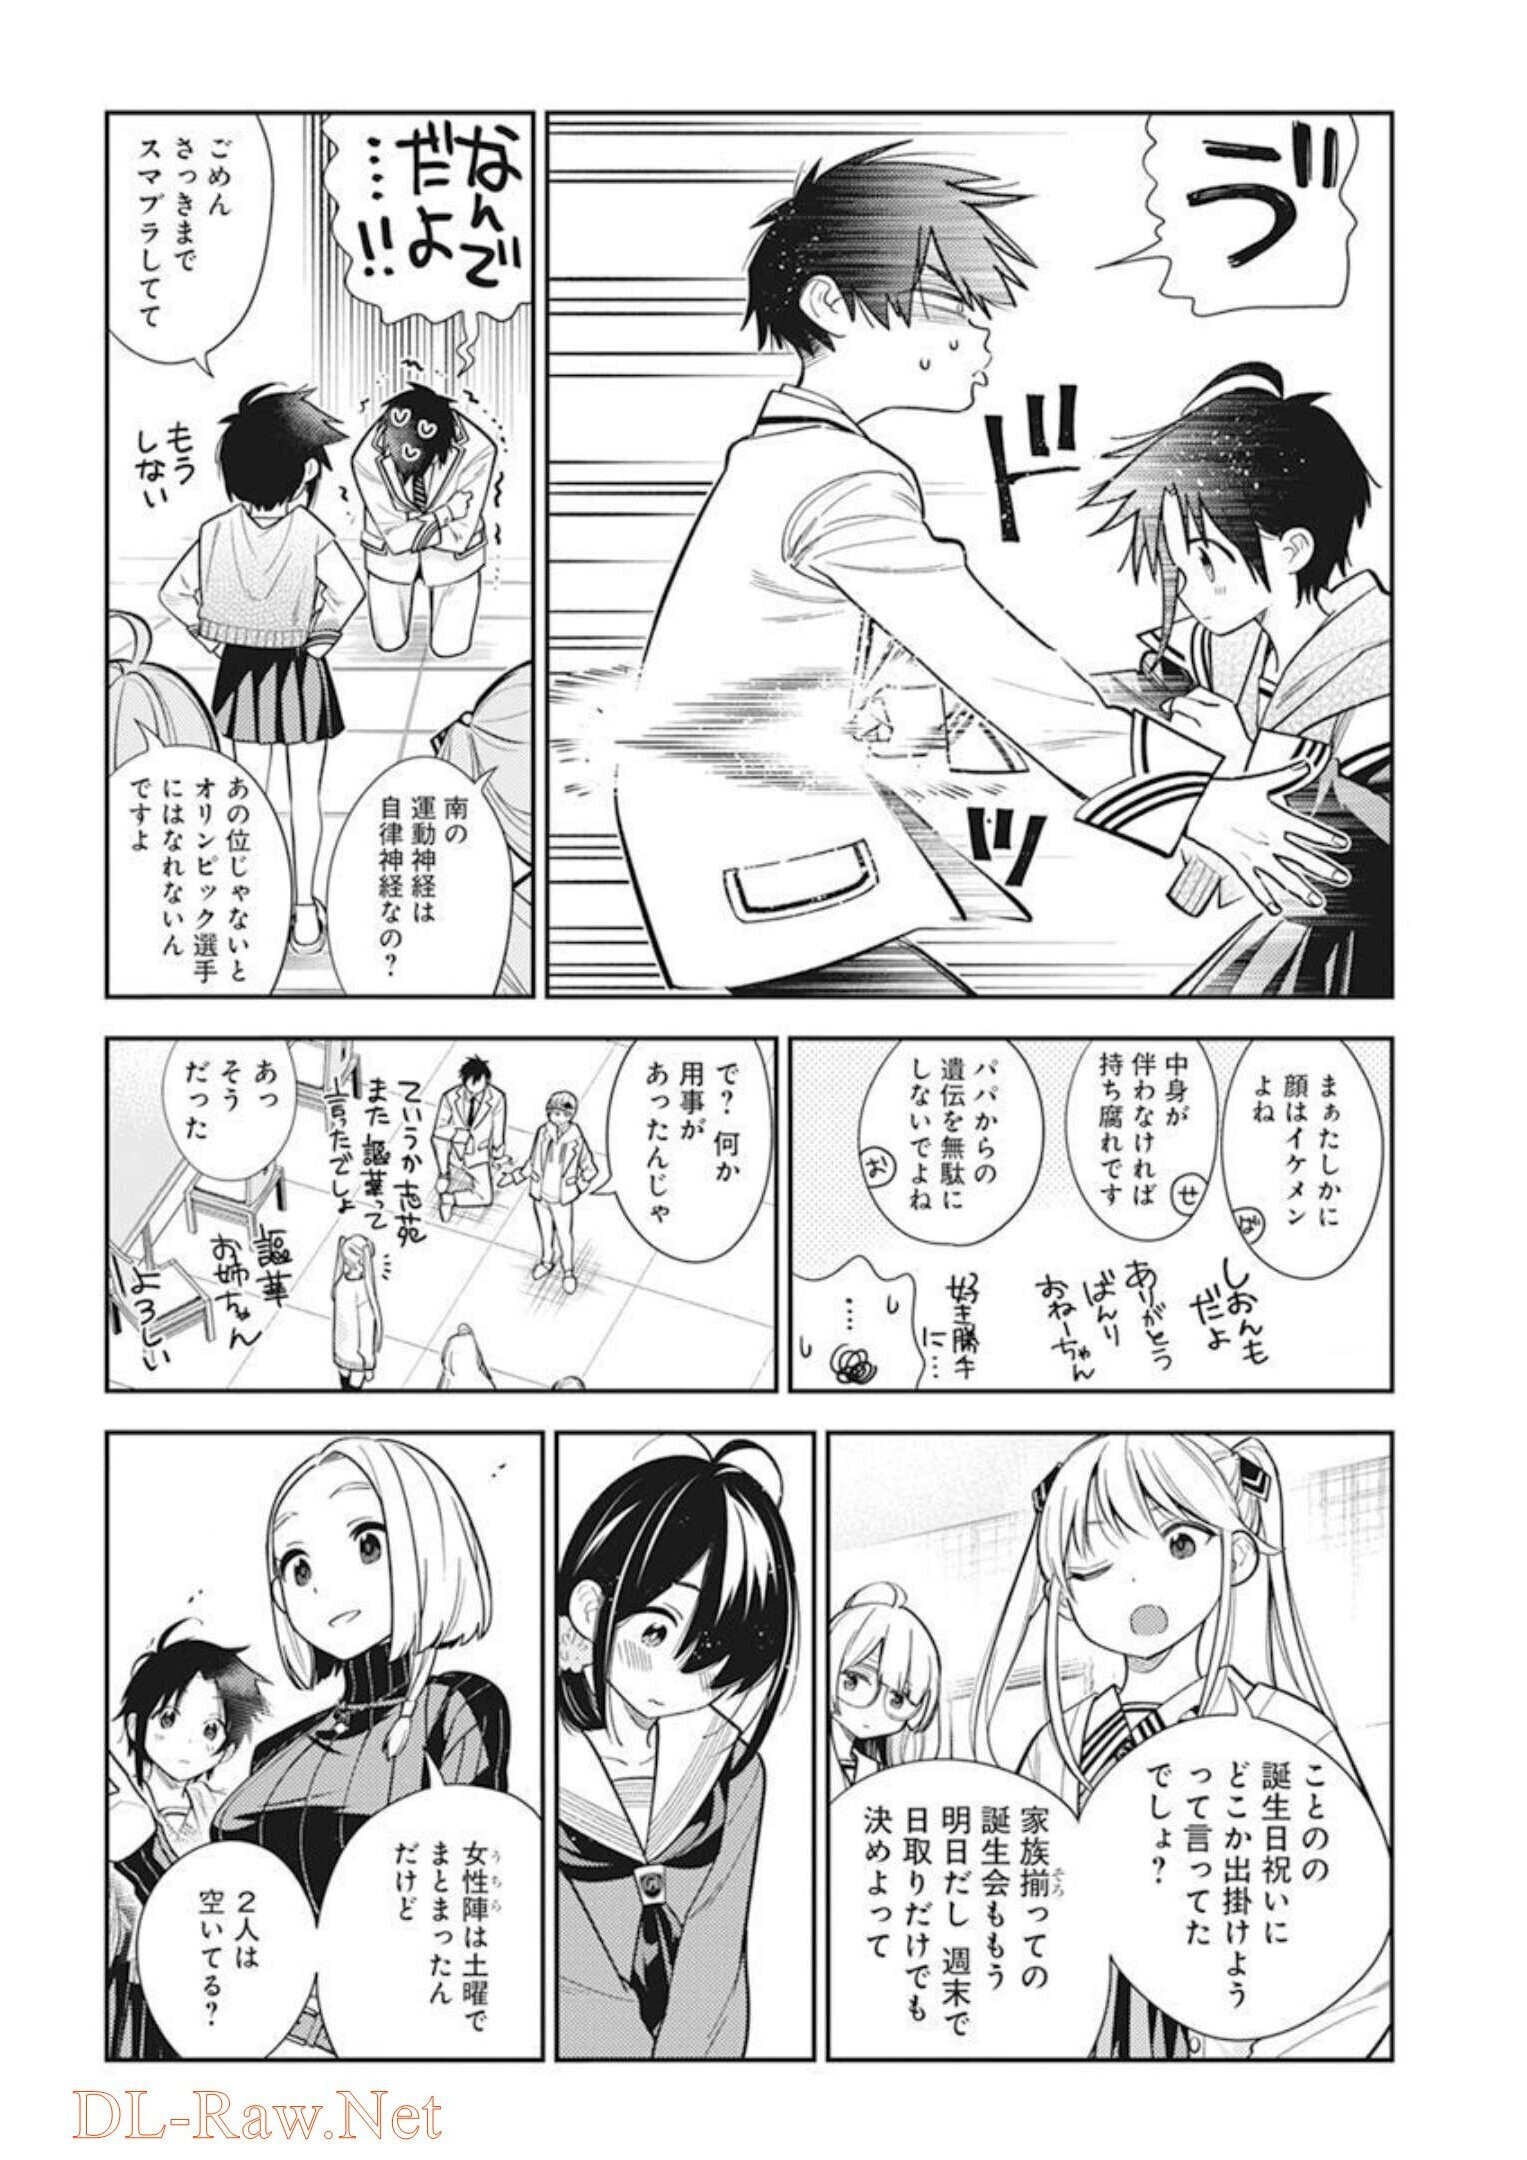 Shiunji-ke no Kodomotachi (Children of the Shiunji Family) - Chapter 01 - Page 15